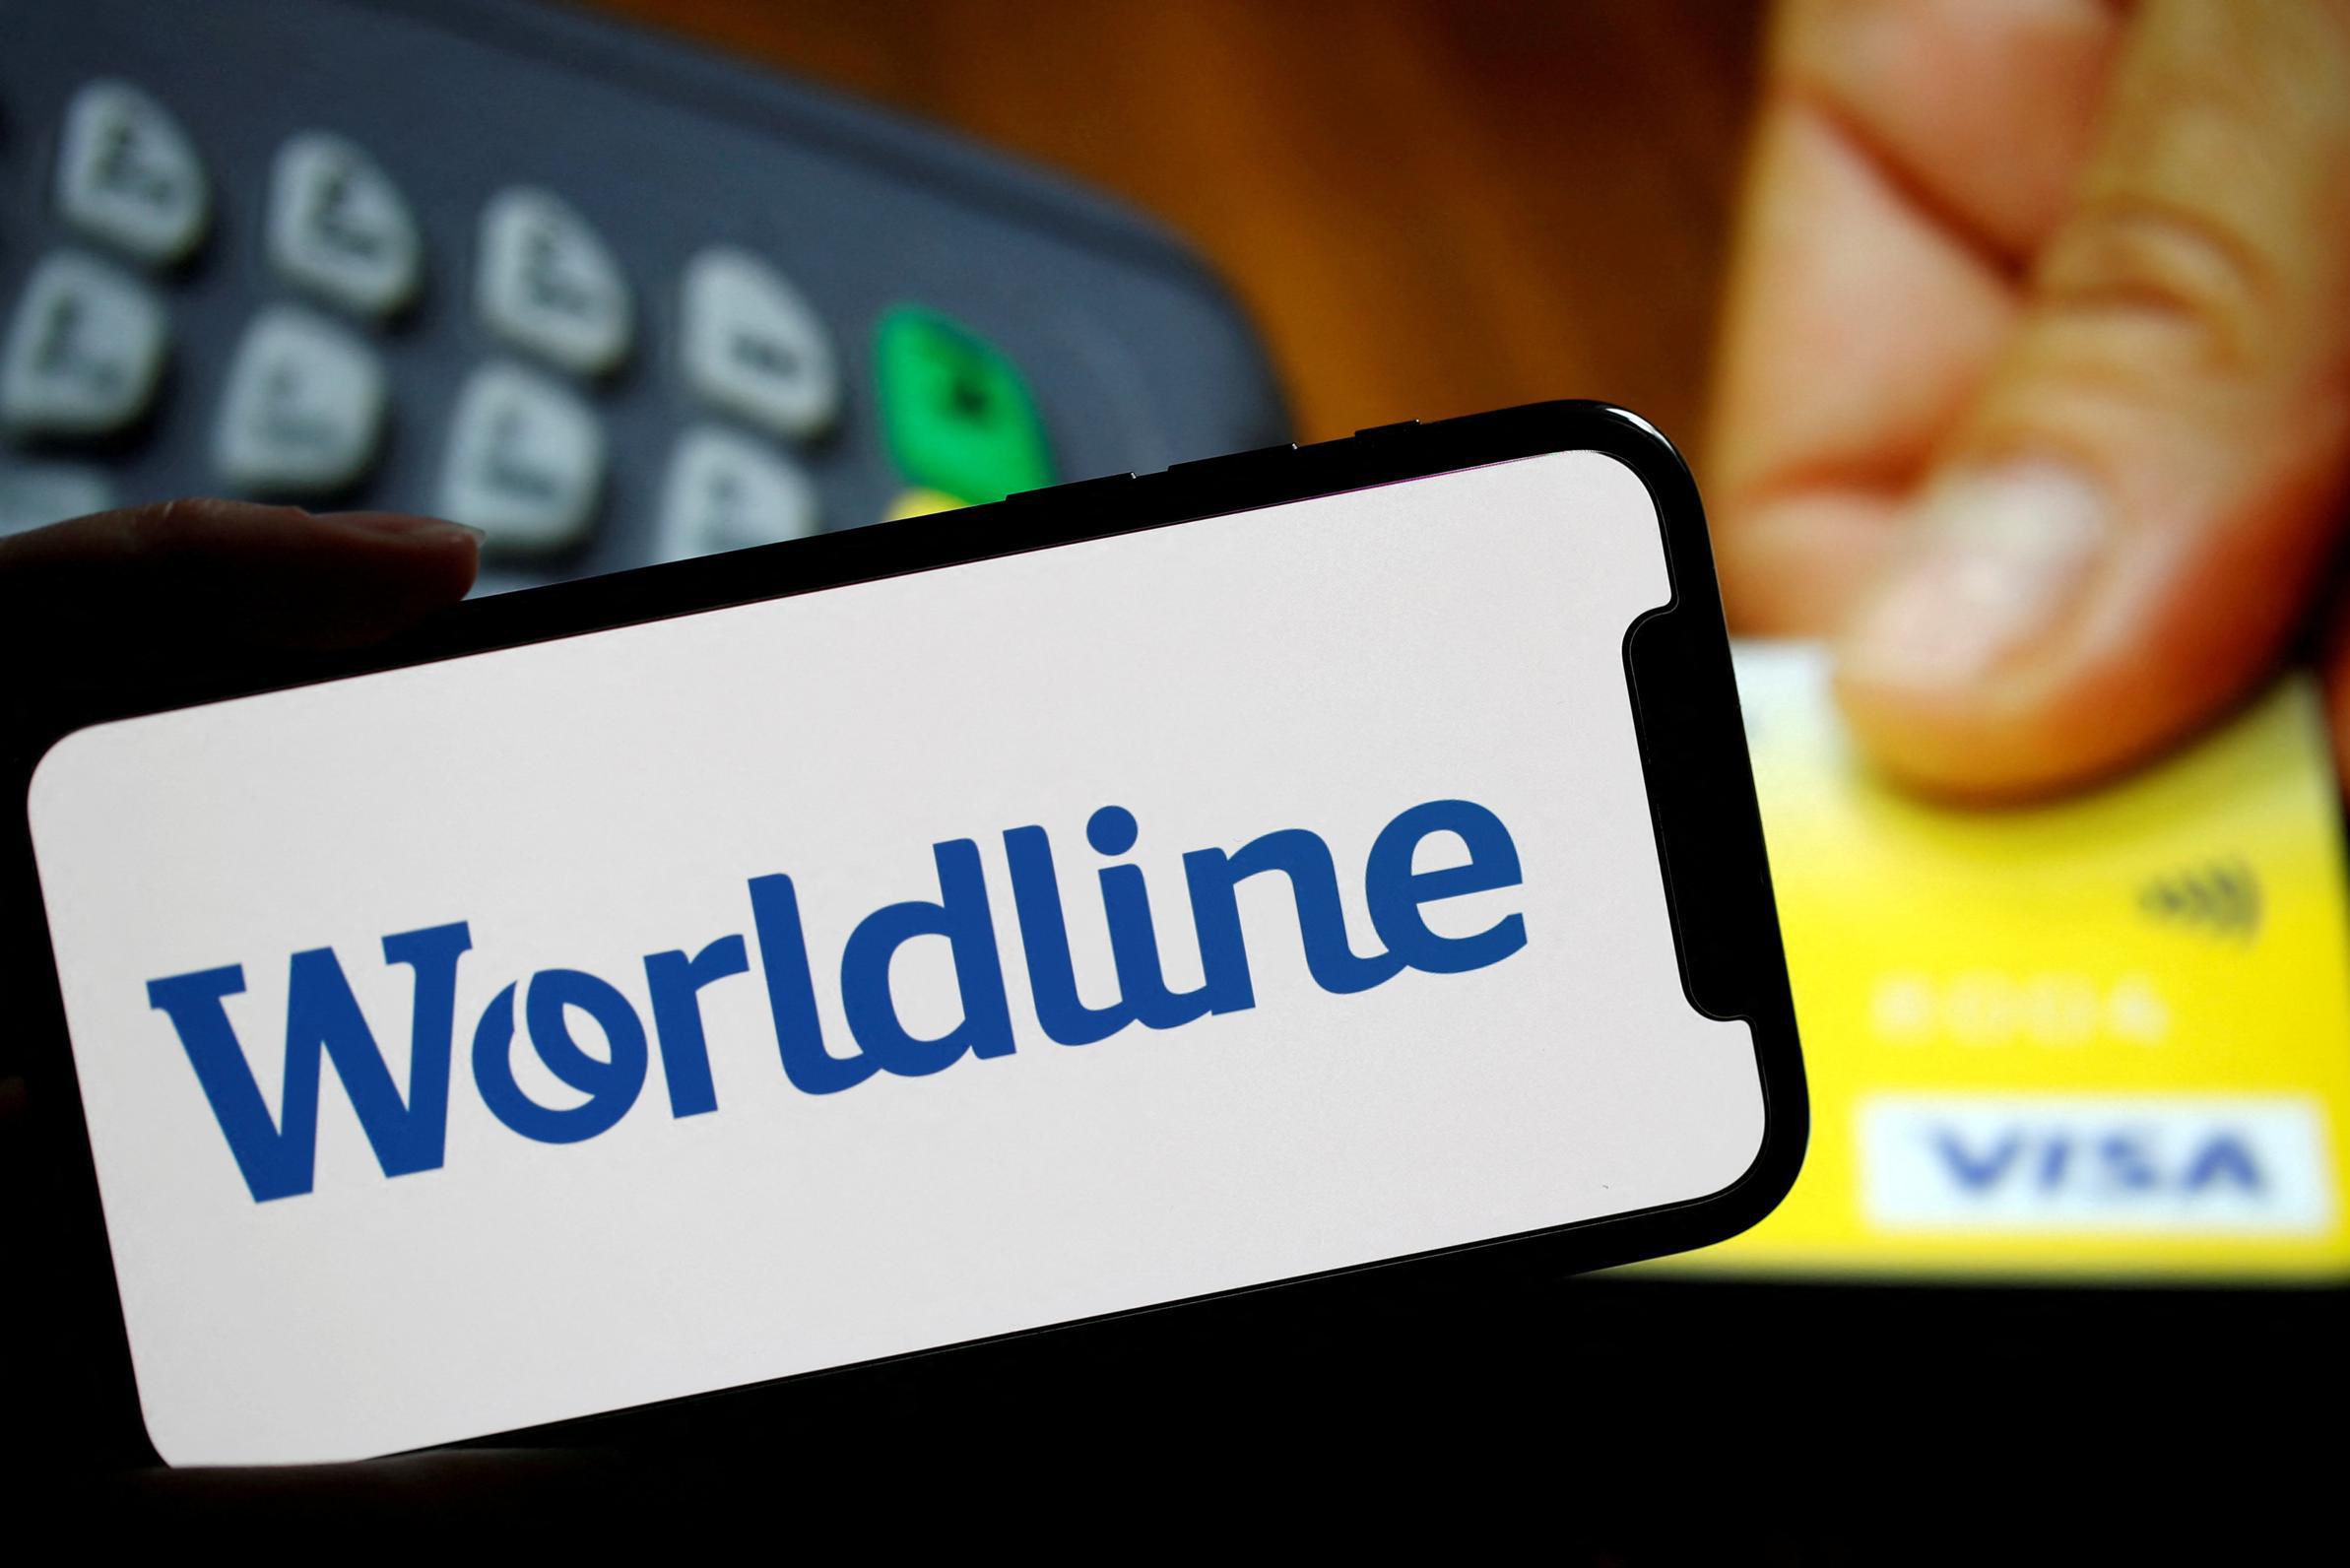 Worldline payment processor plans to reduce workforce, including in Belgium